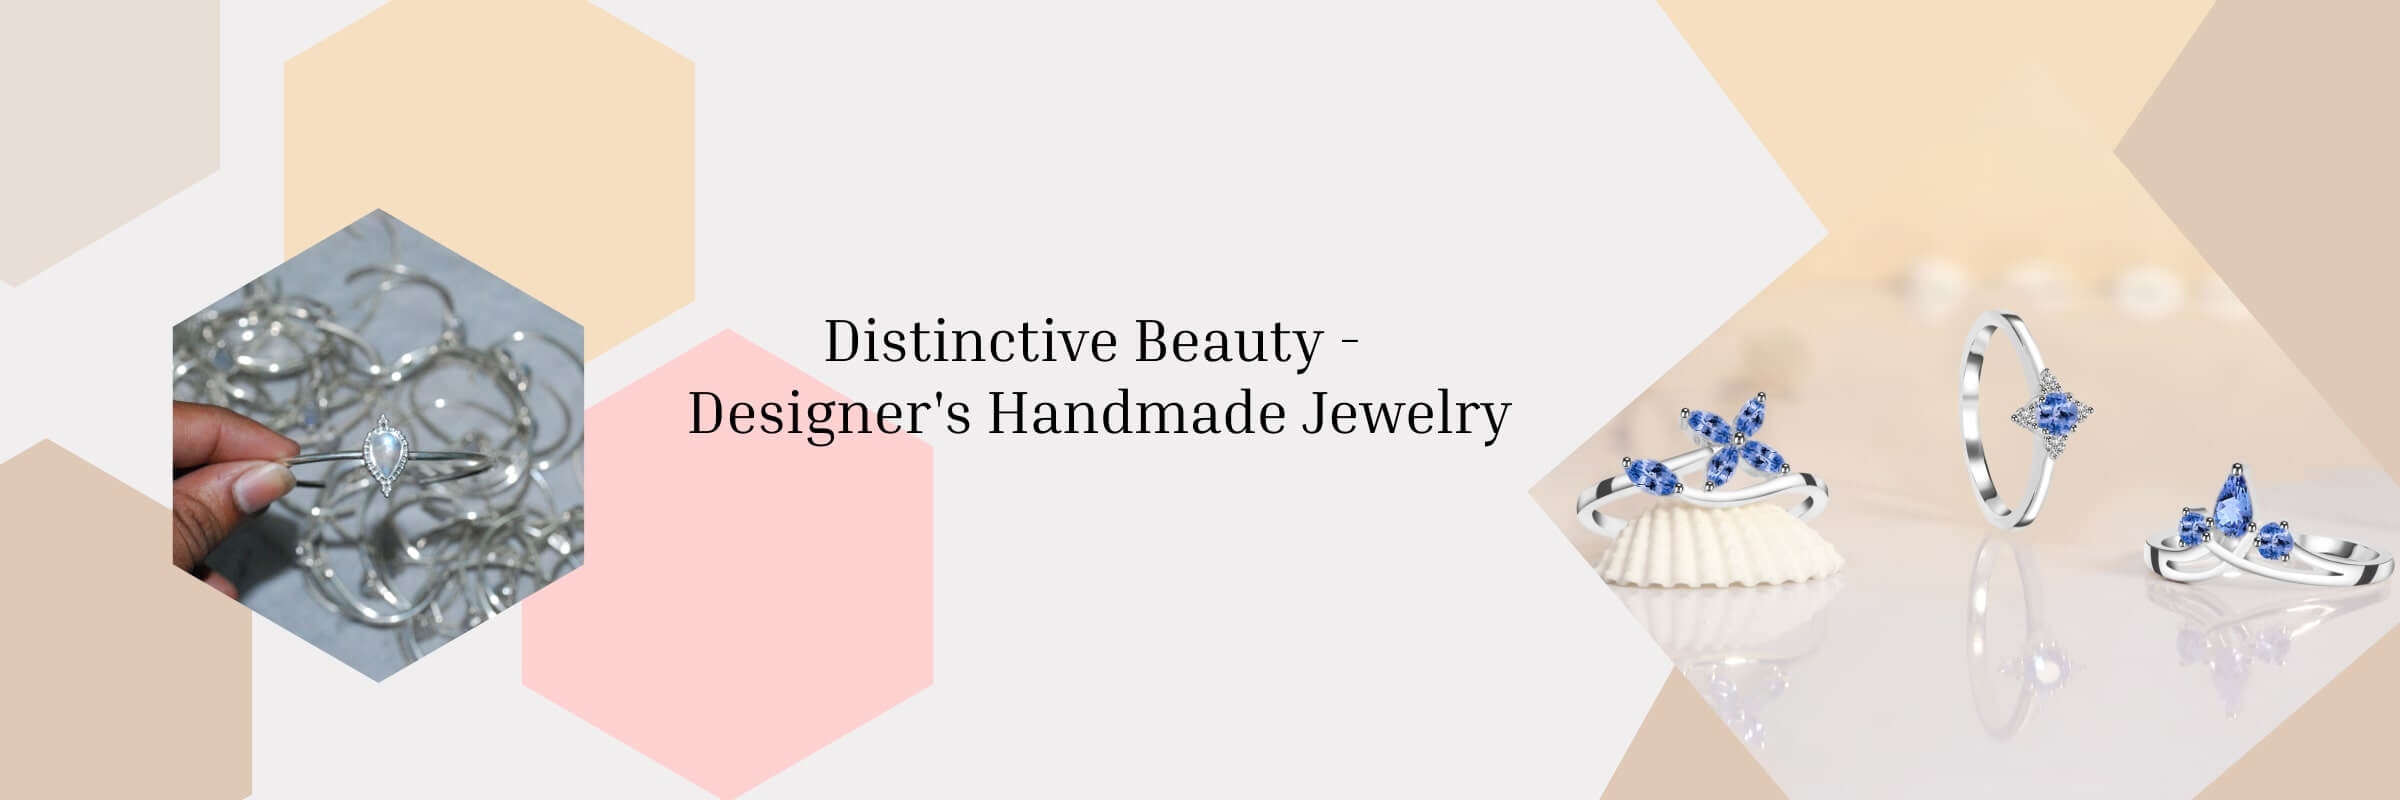 Designer and Handmade Jewelry Distinction